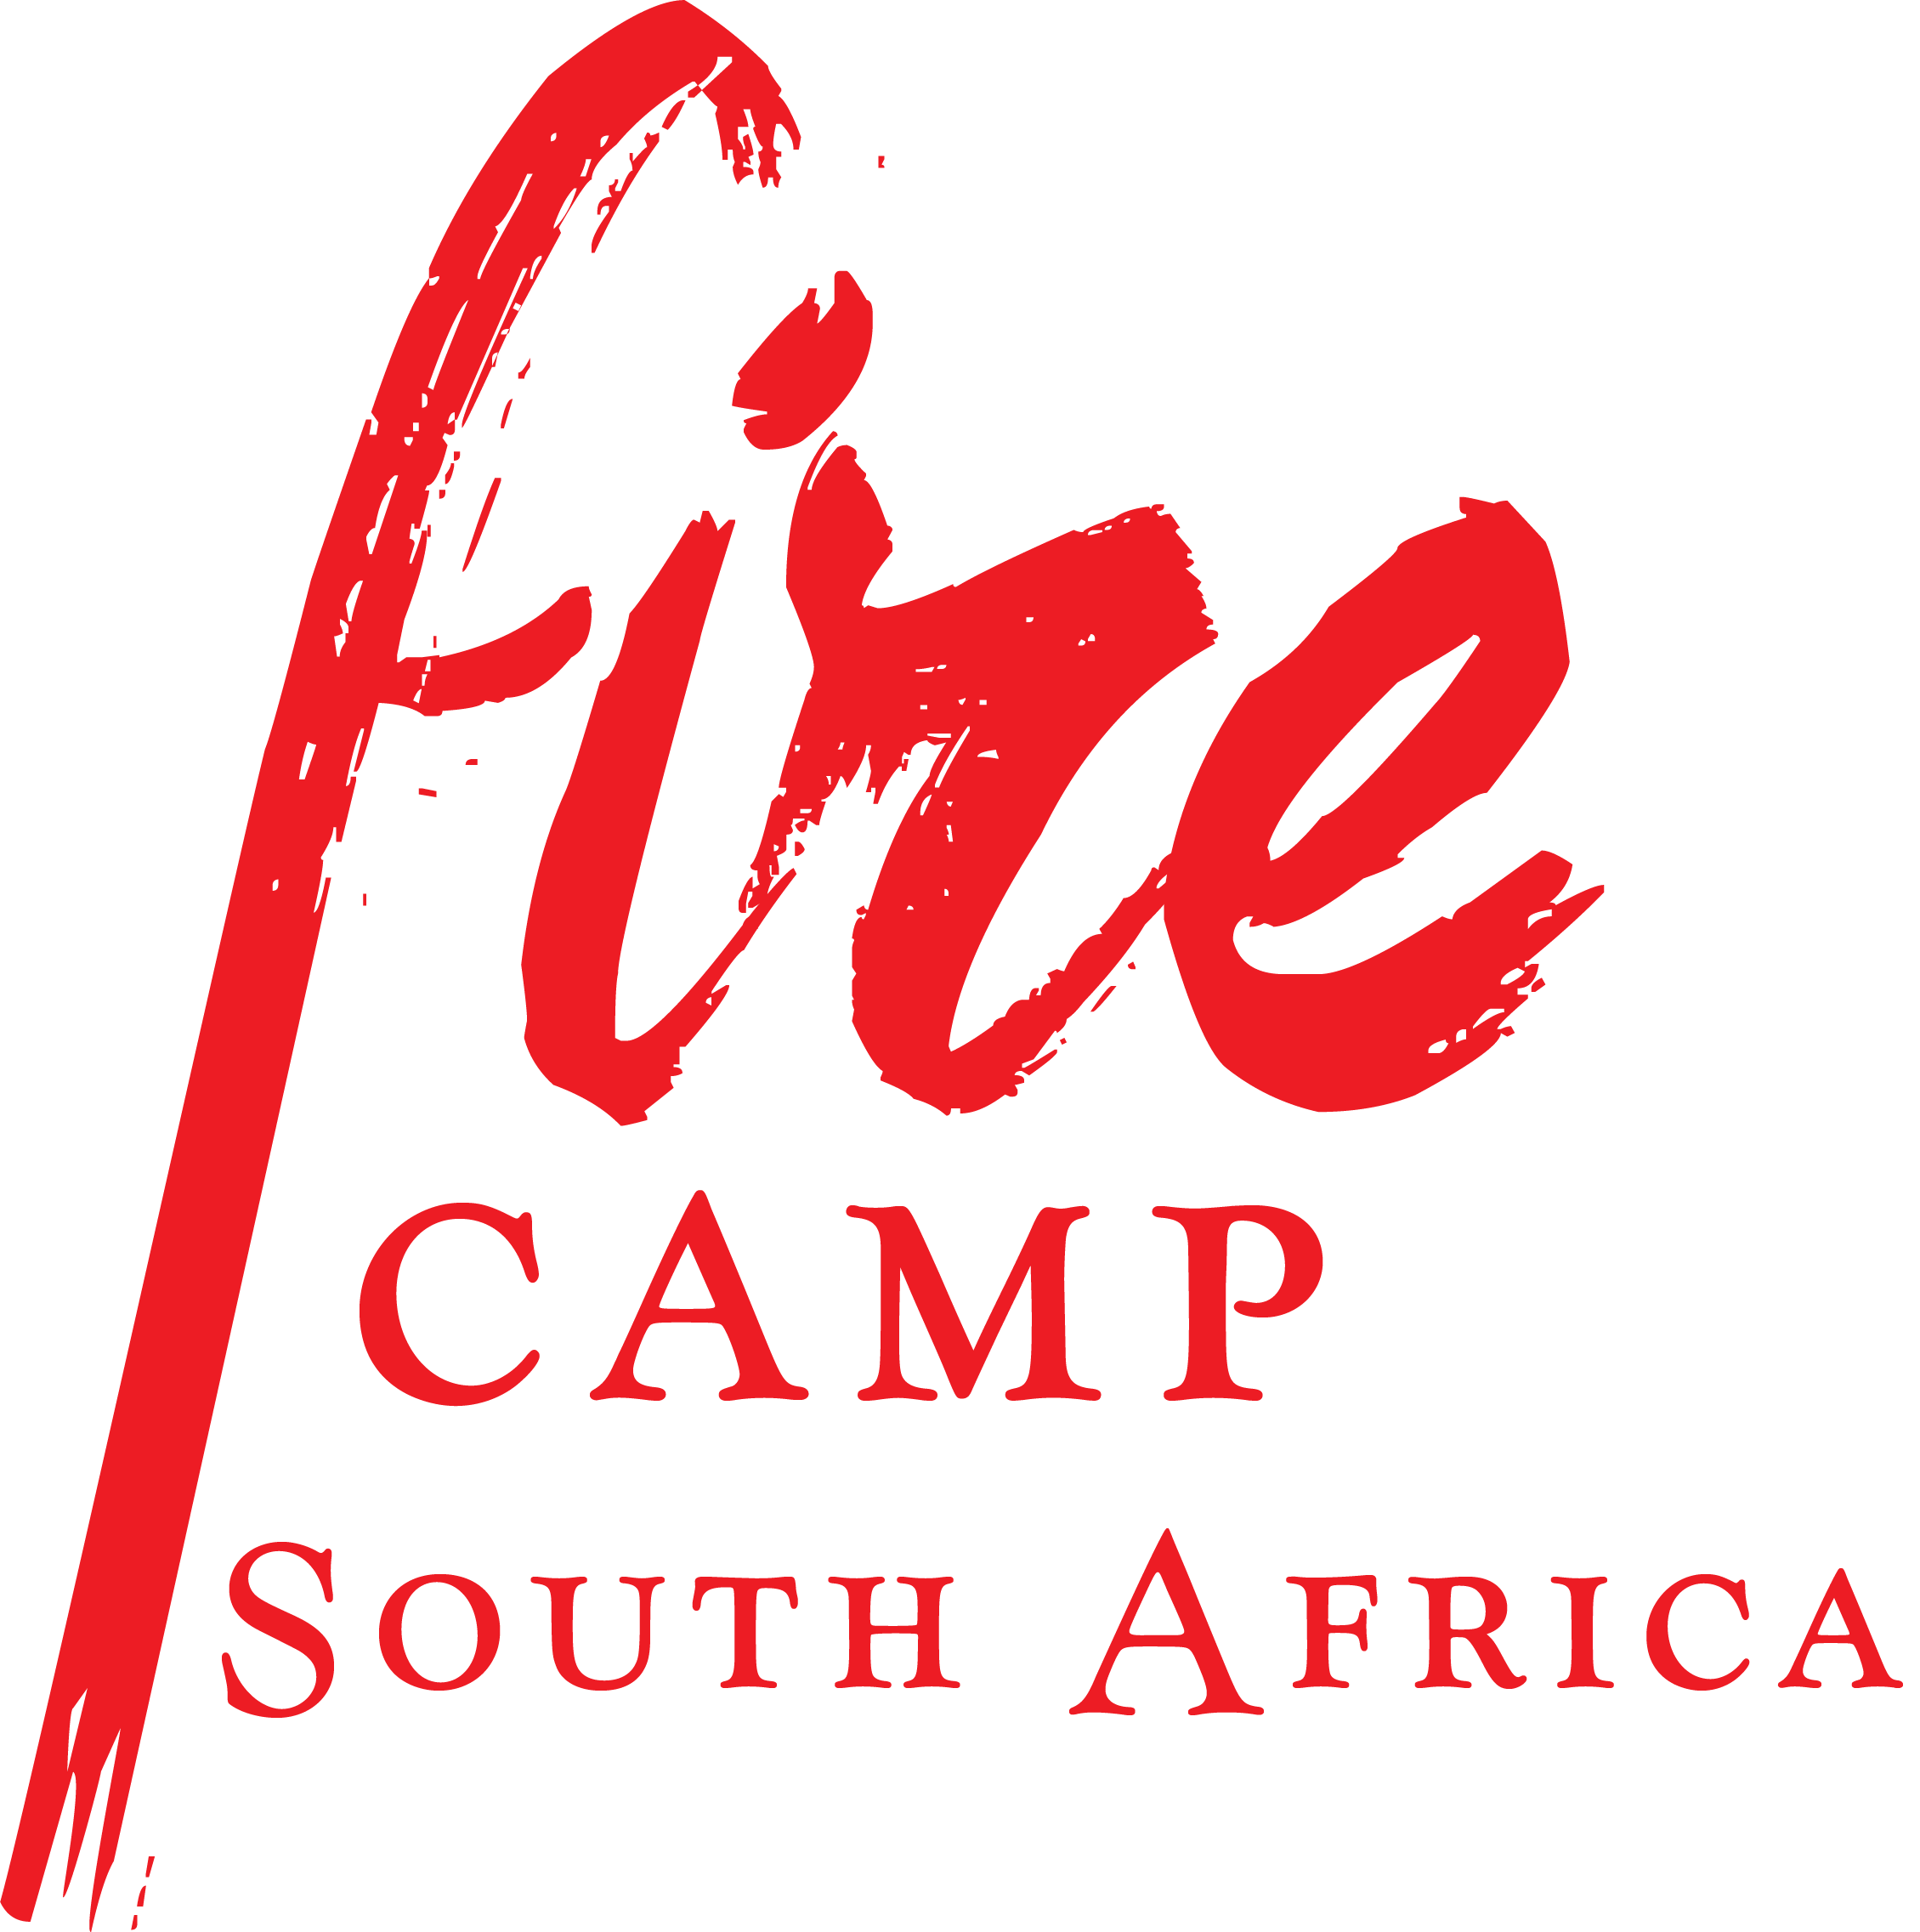 FireCamp South Africa